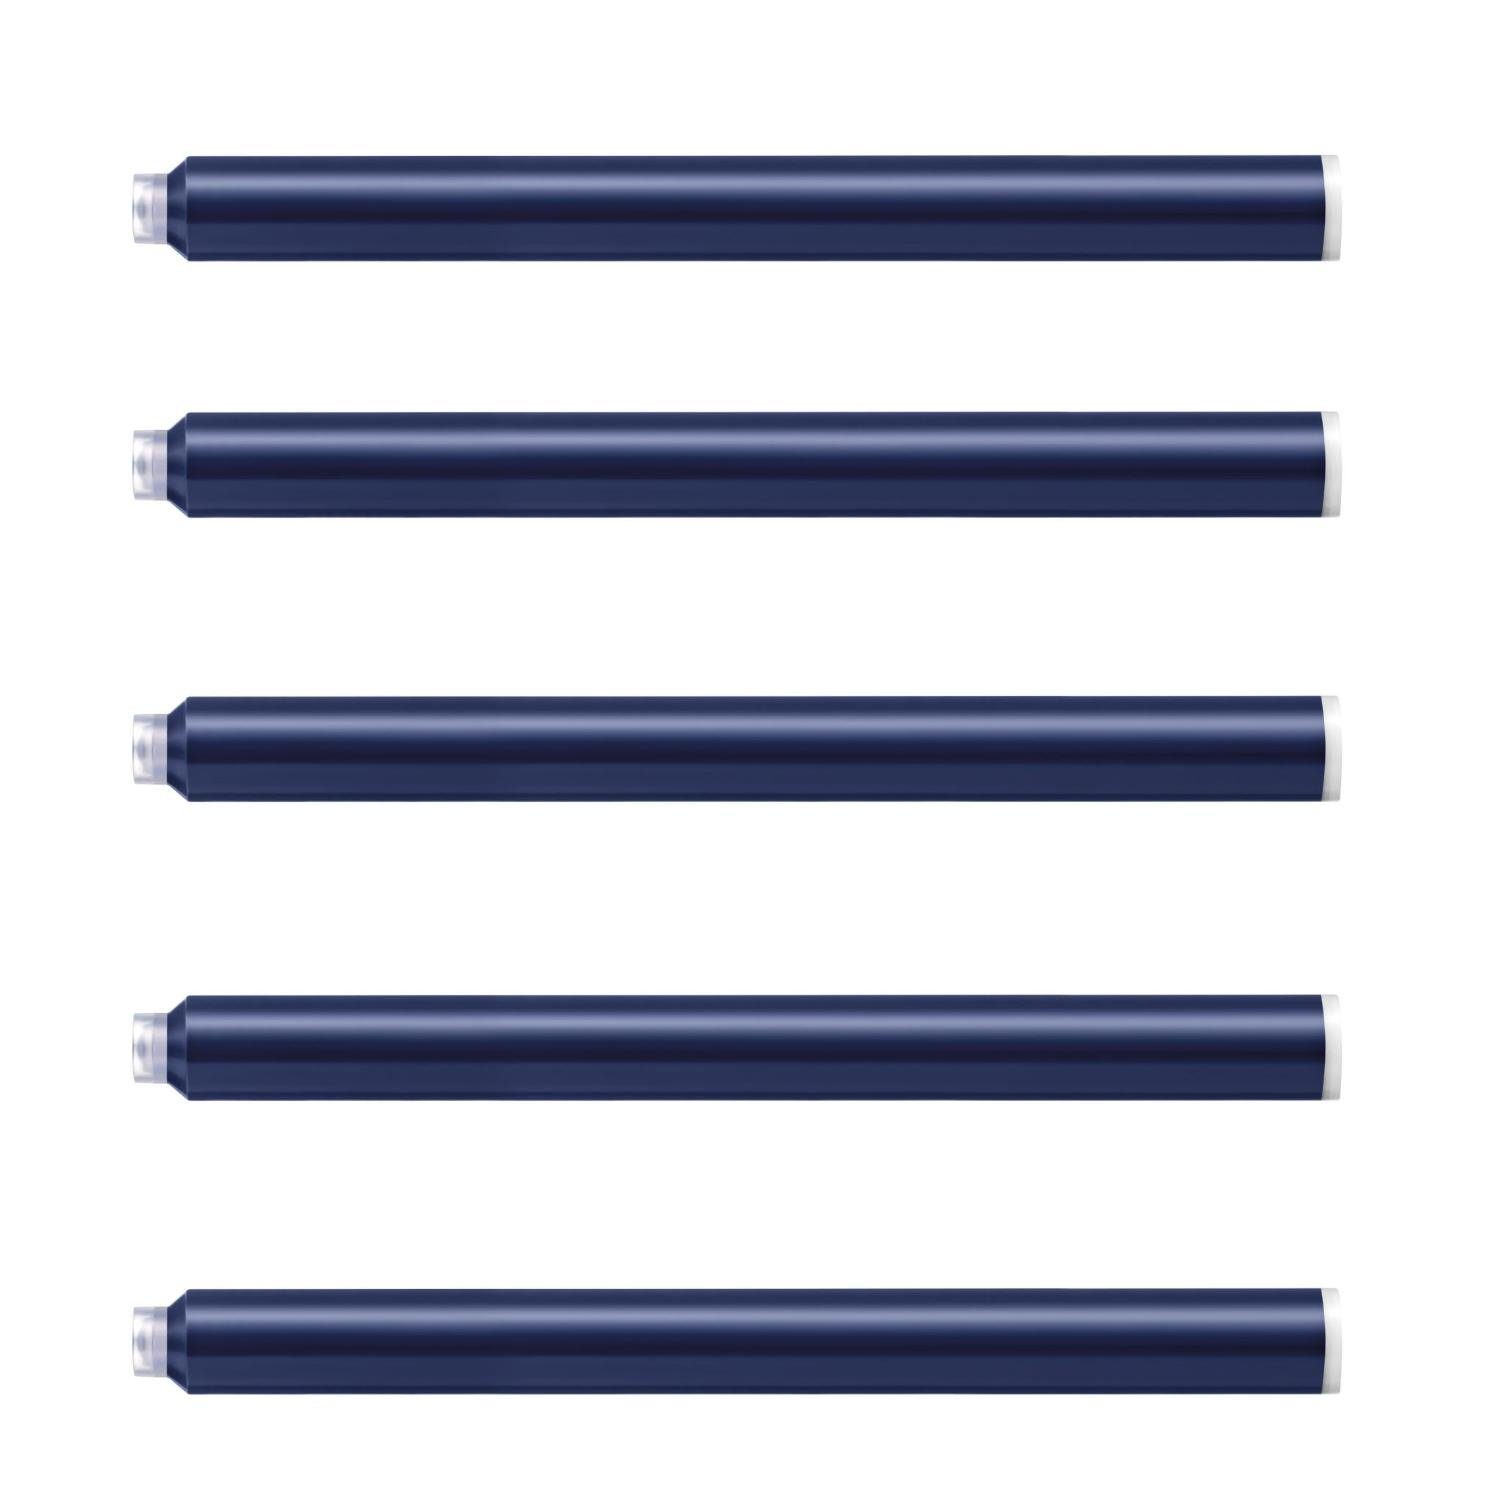 Pelikan Füllfederhalter Großraum-Tintenpatronen 4001 Pelikan GTP/5, blau-schwarz